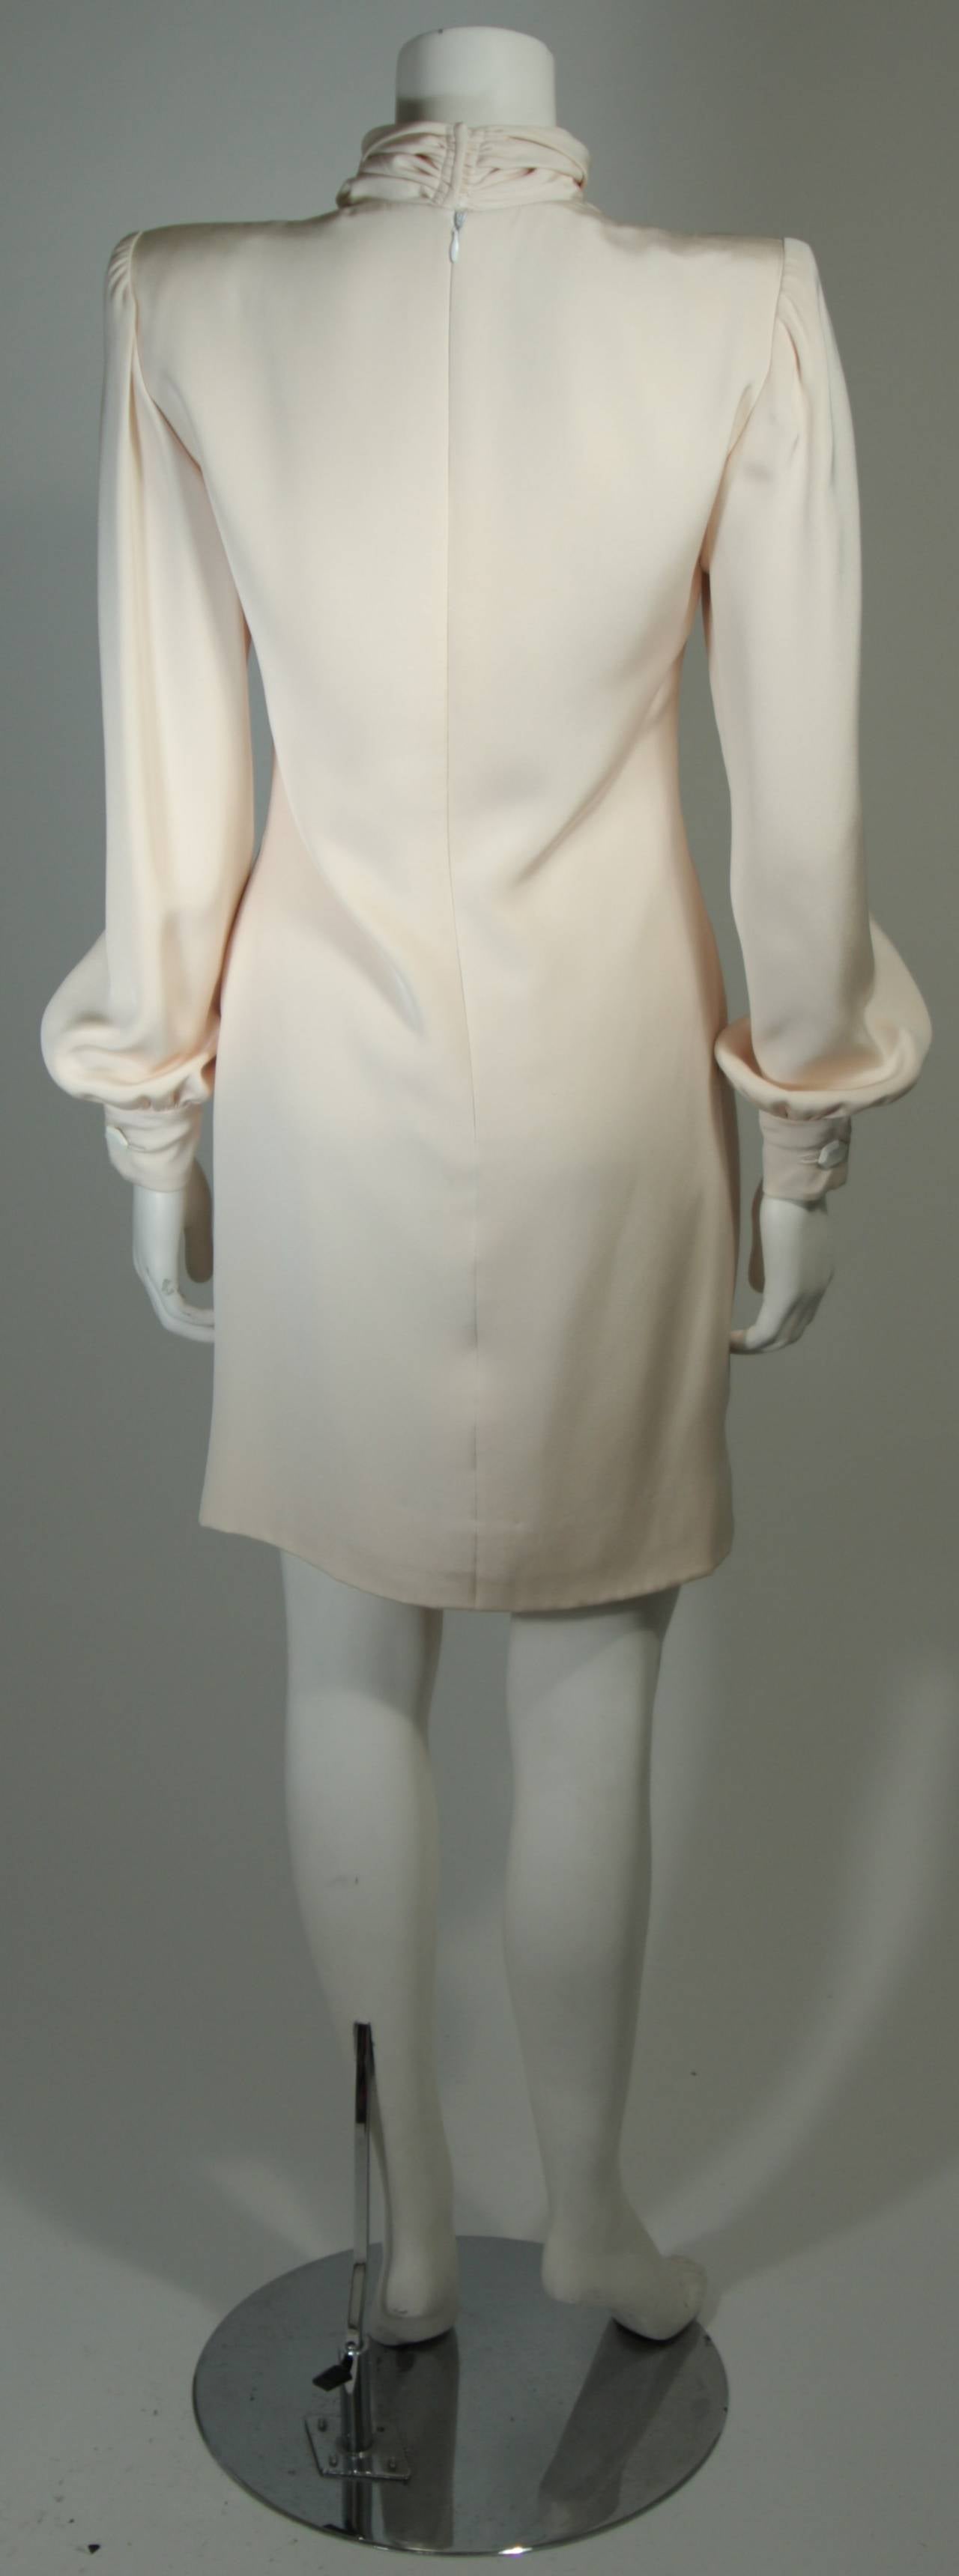 Galanos Couture Cream Silk Cocktail Dress Size 2 4 2